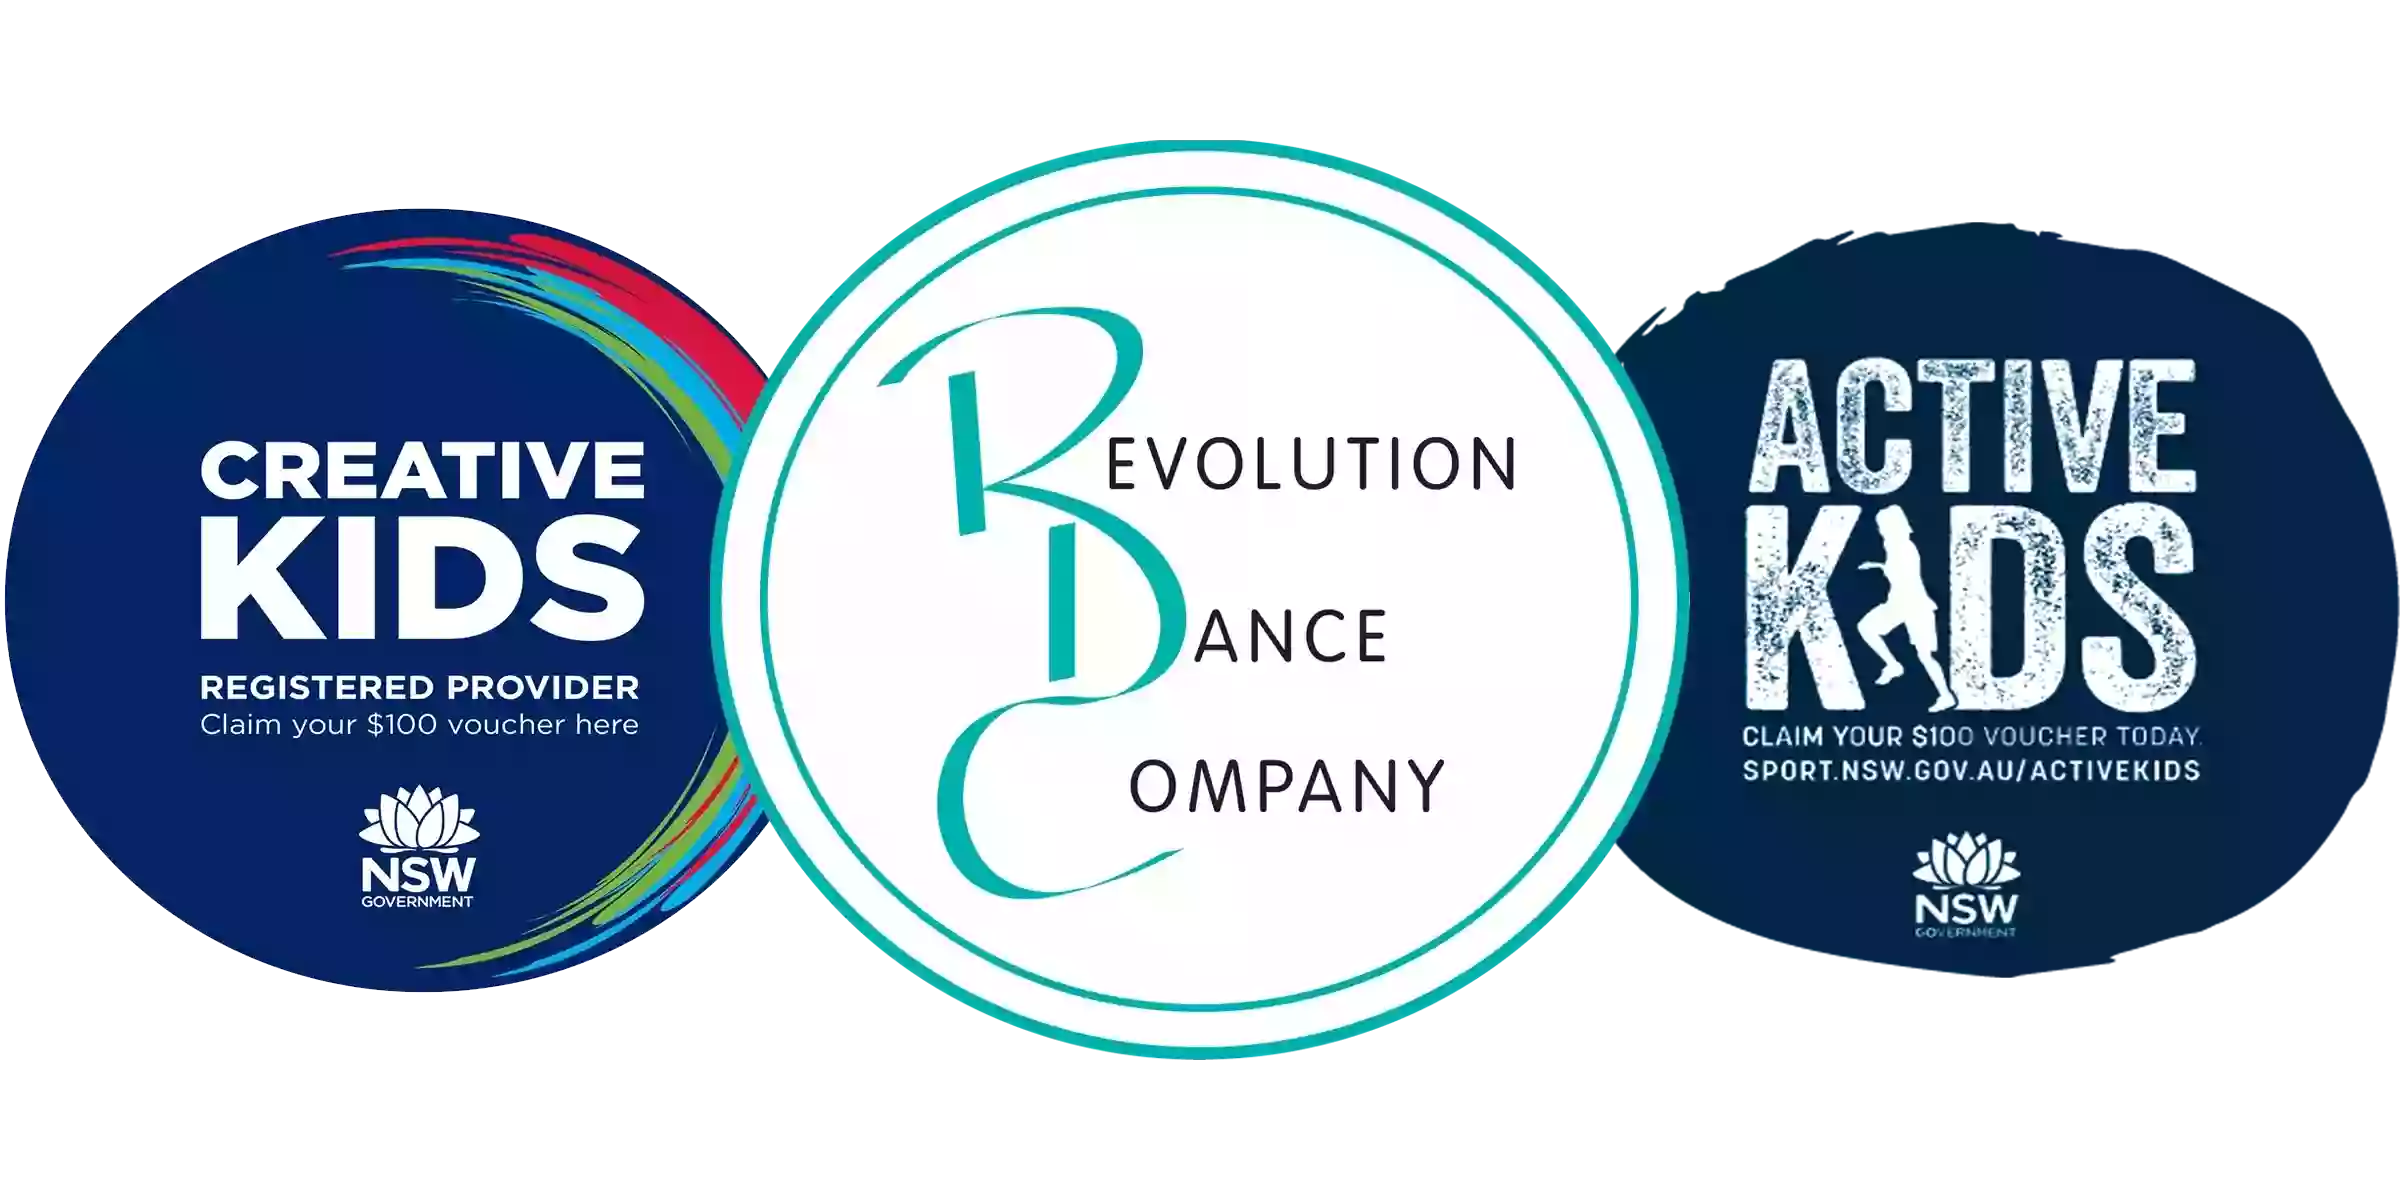 Revolution Dance Company